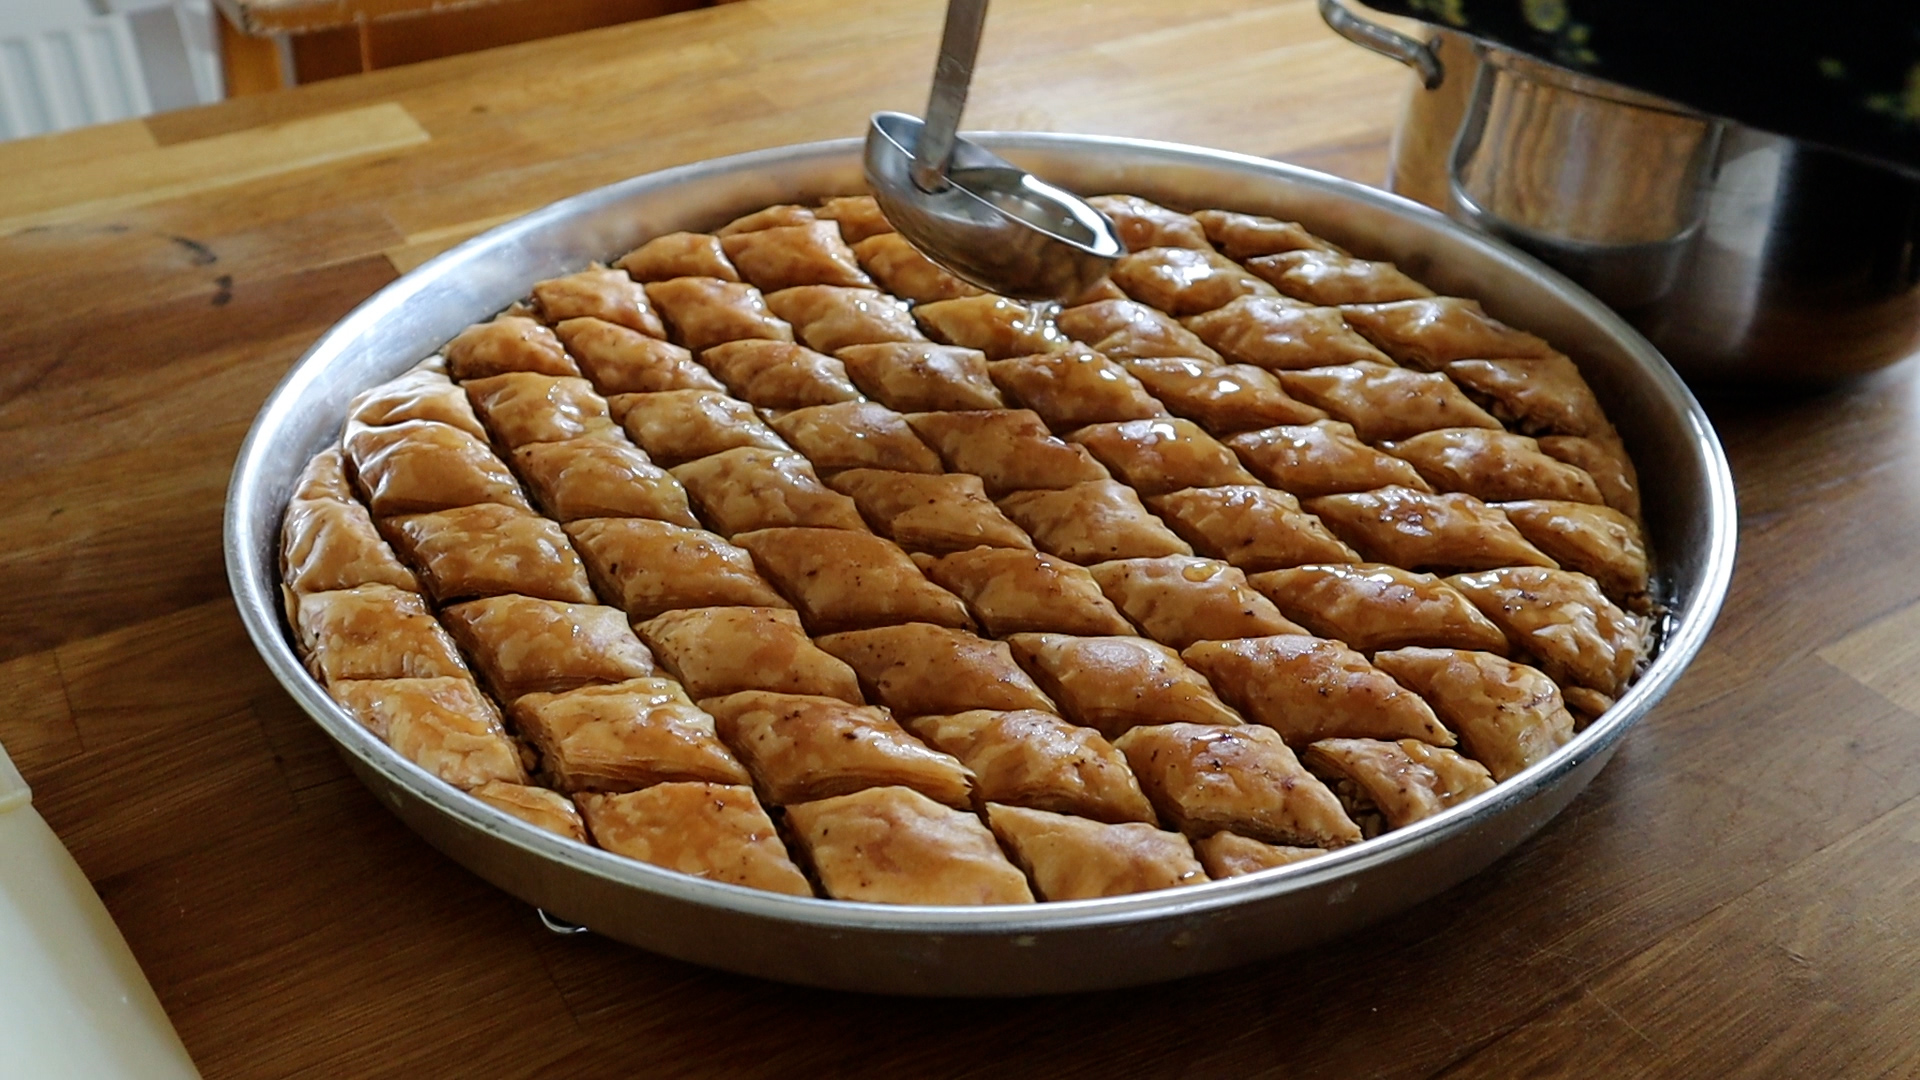 Baklava Recipe From Scratch! - Turkish Food Travel